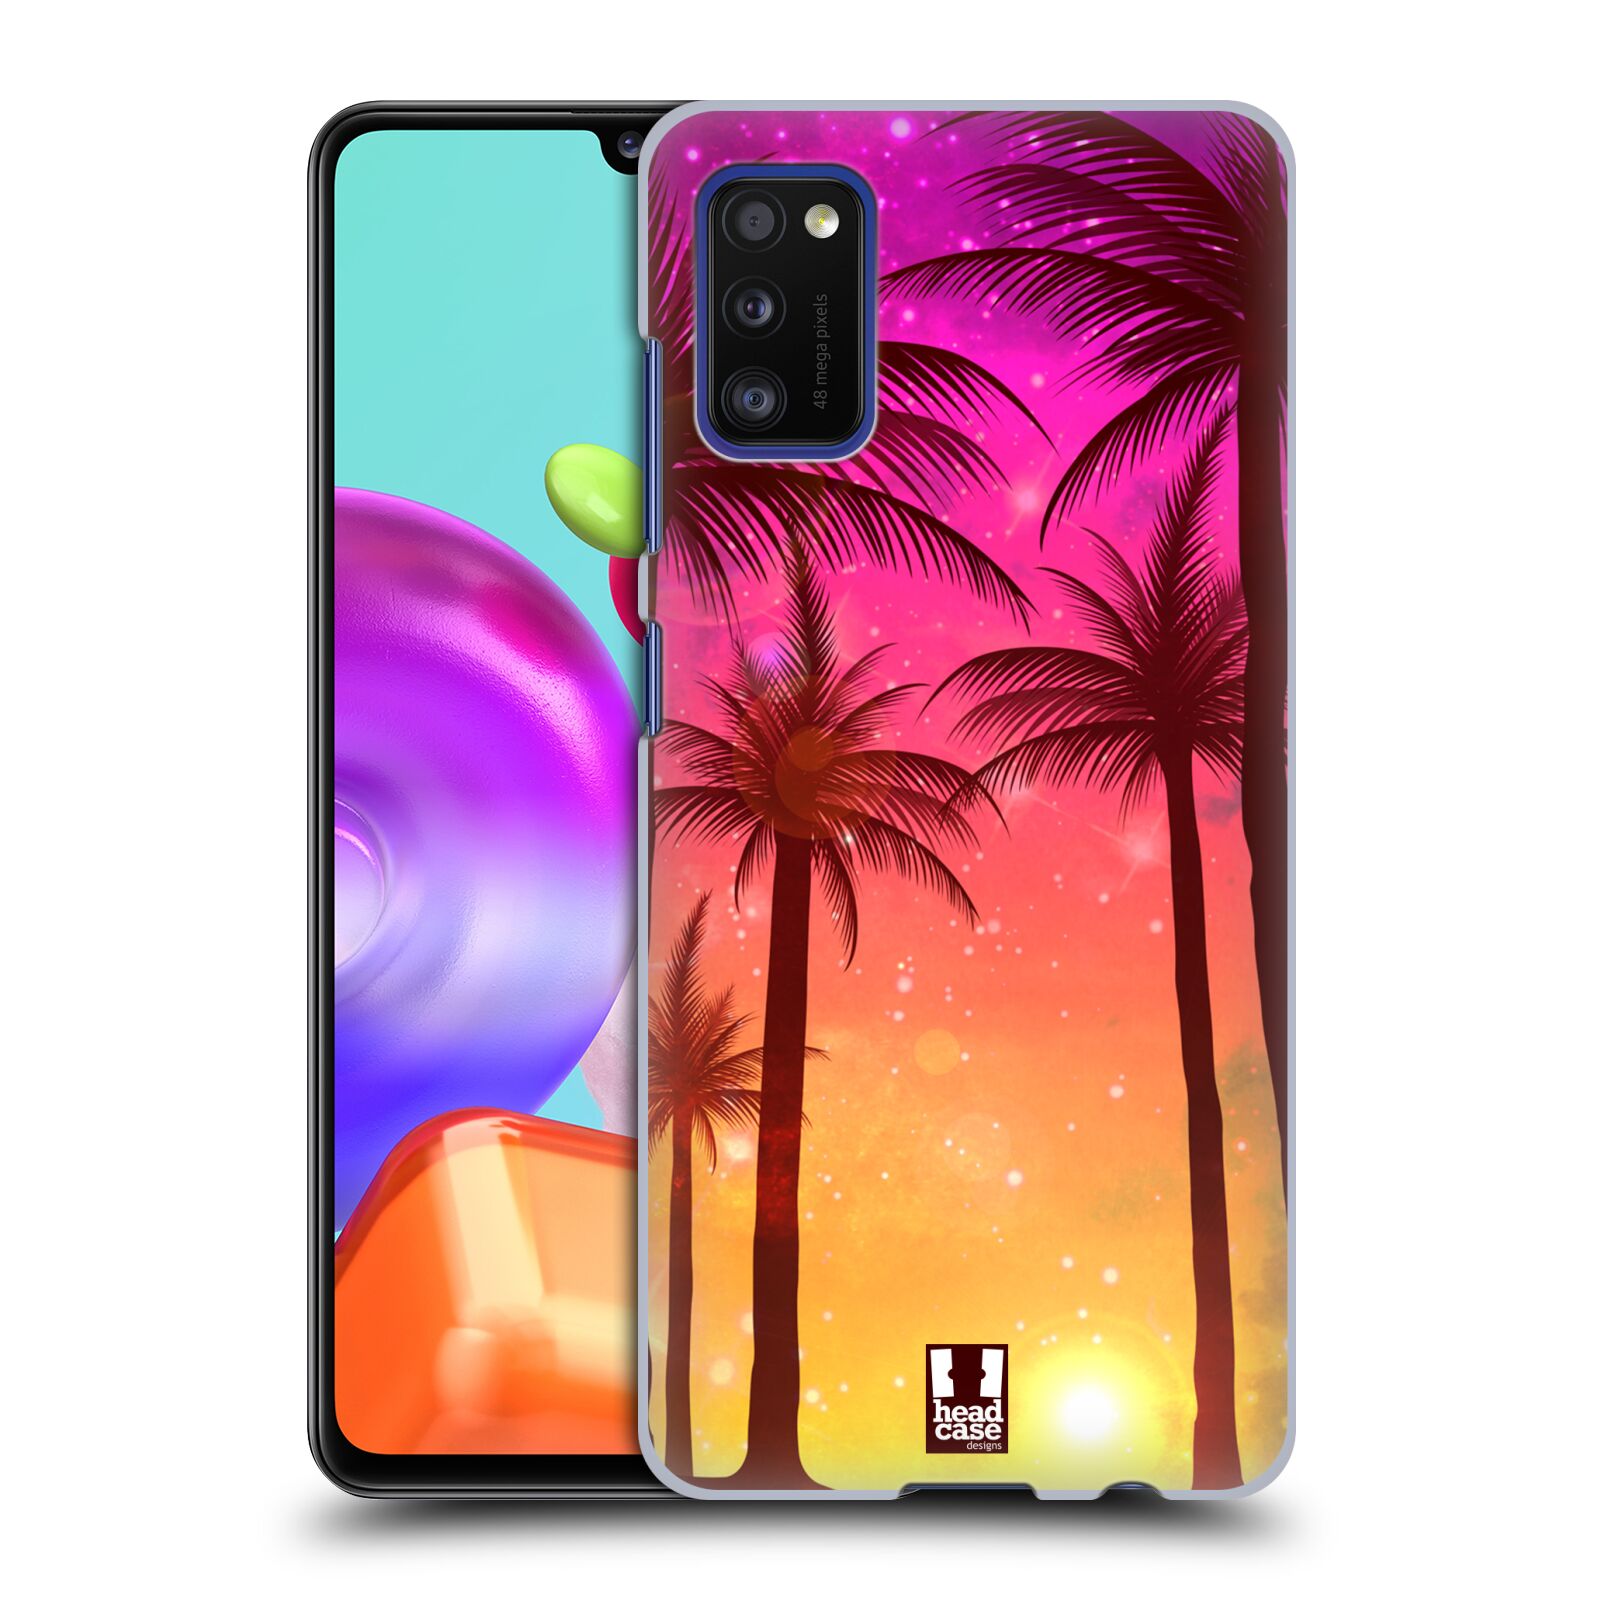 Zadní kryt na mobil Samsung Galaxy A41 vzor Kreslený motiv silueta moře a palmy RŮŽOVÁ